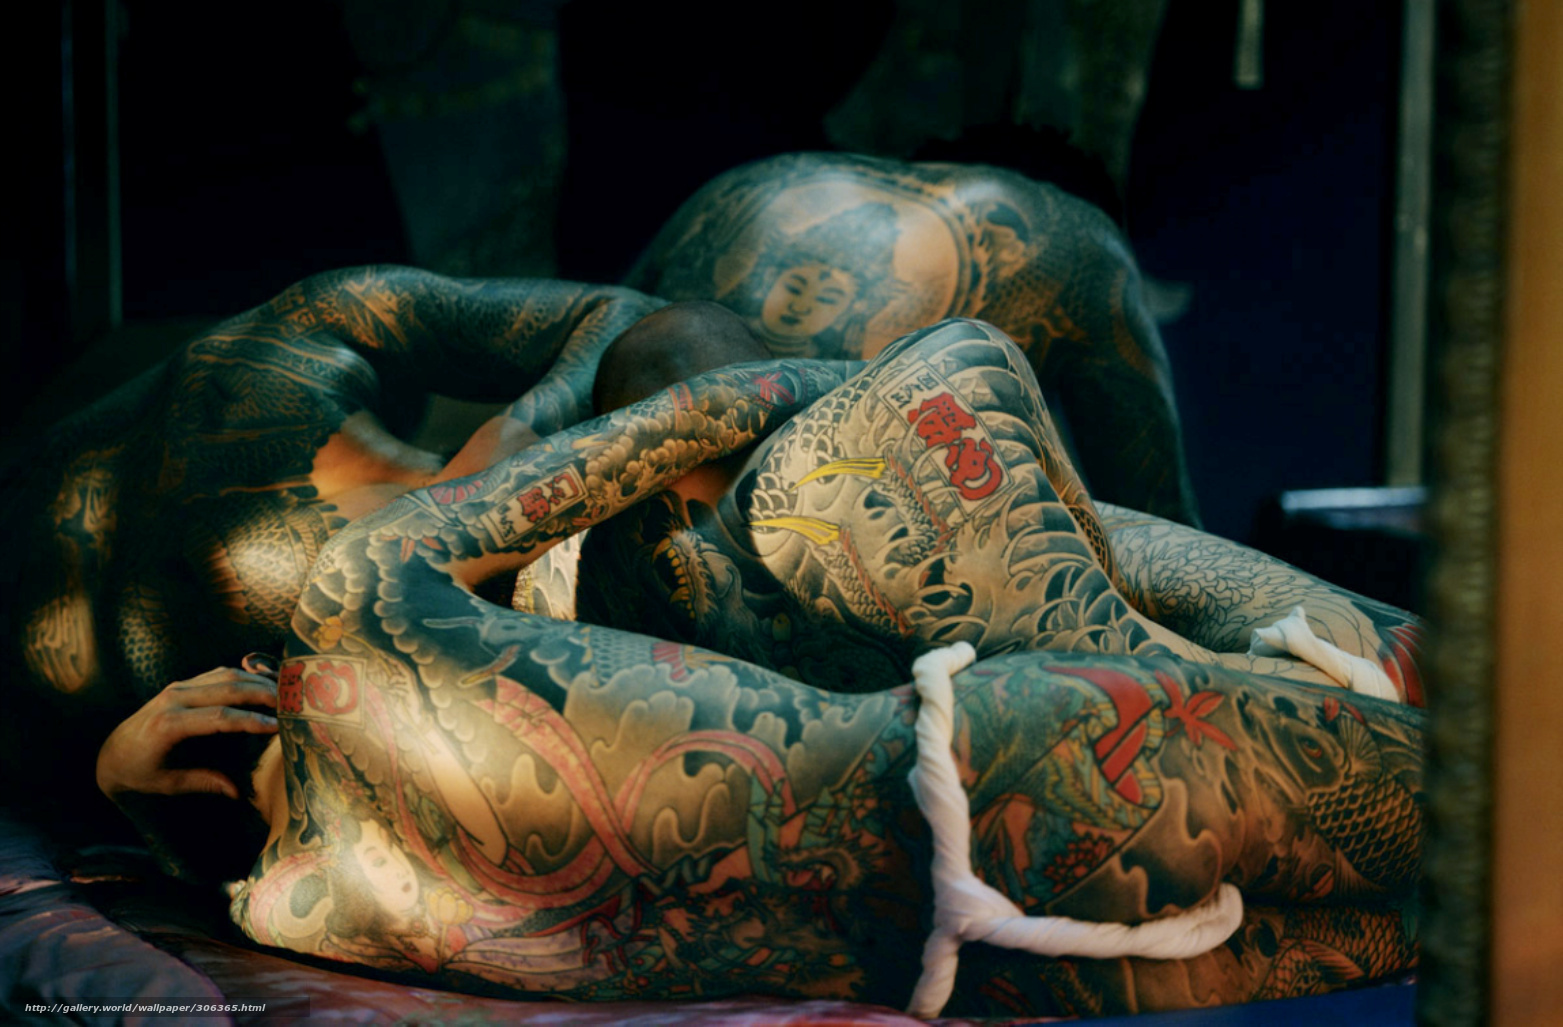 Download wallpaper body art tattoos free desktop wallpaper in the